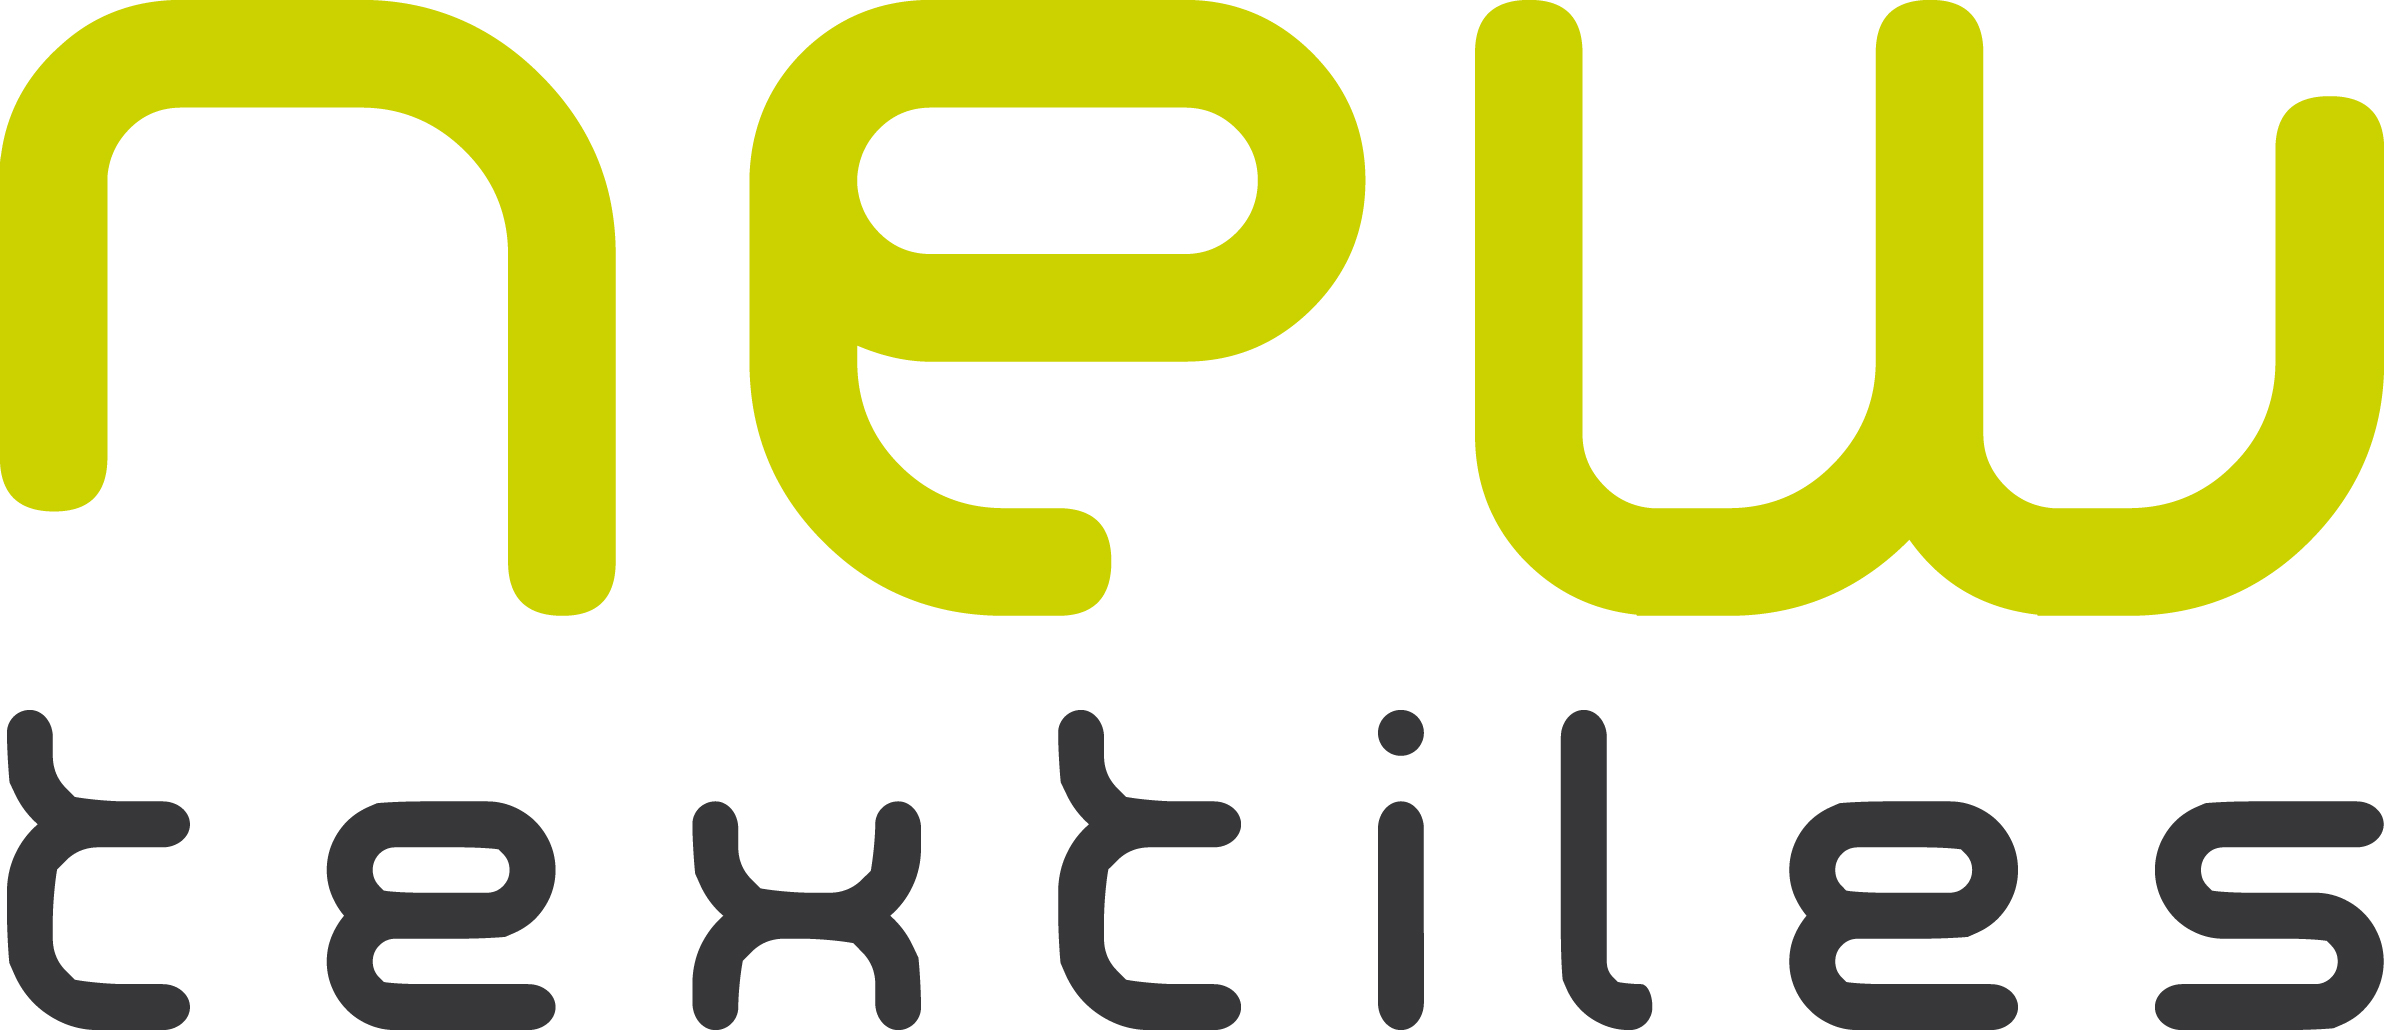 New Textiles Spin-off logo